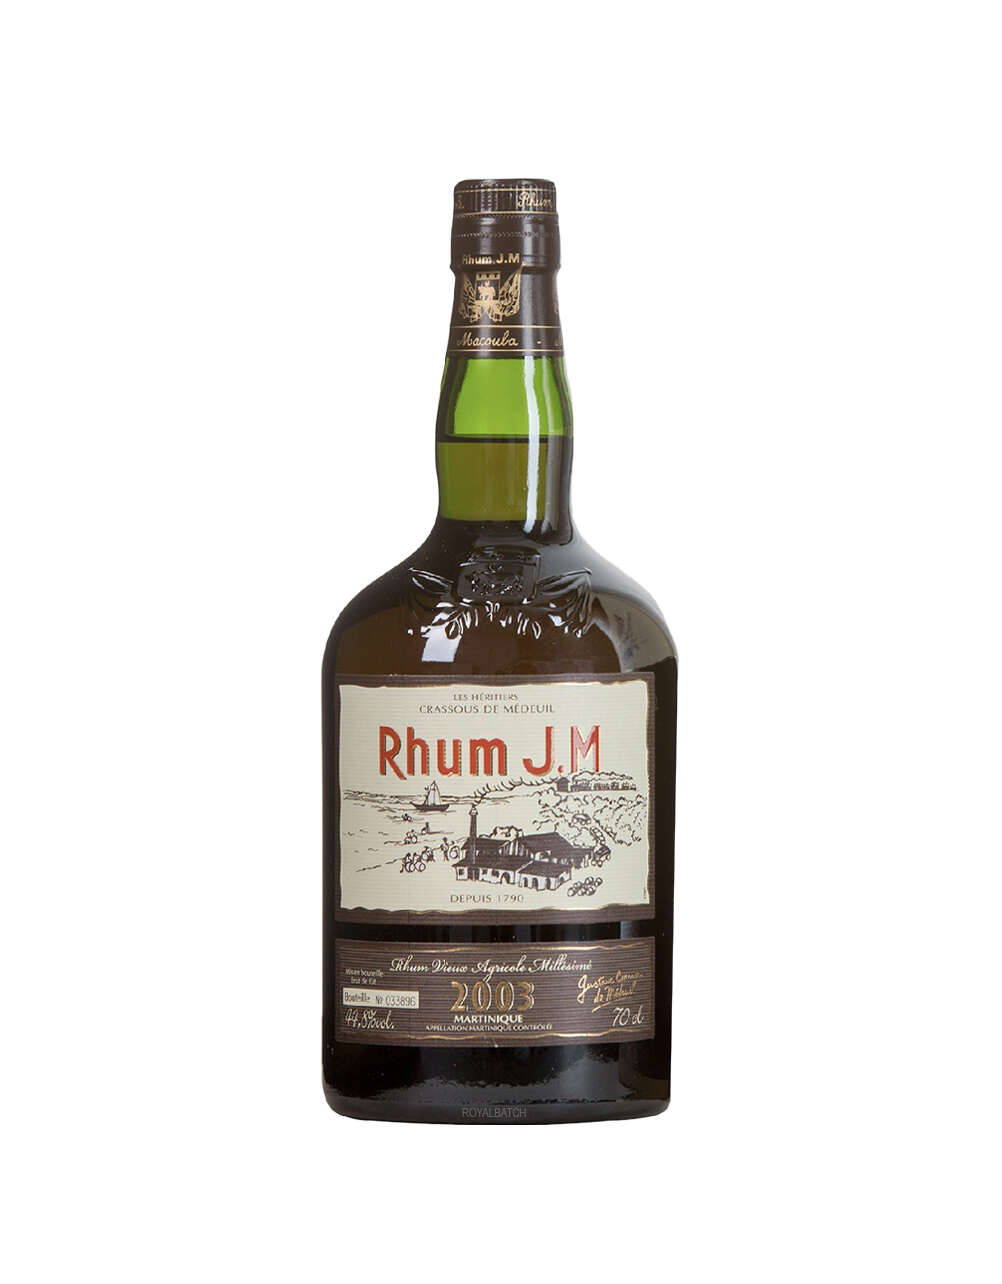 Rhum J.M Vieux Agricole Millesime 10 Year Rum 2003